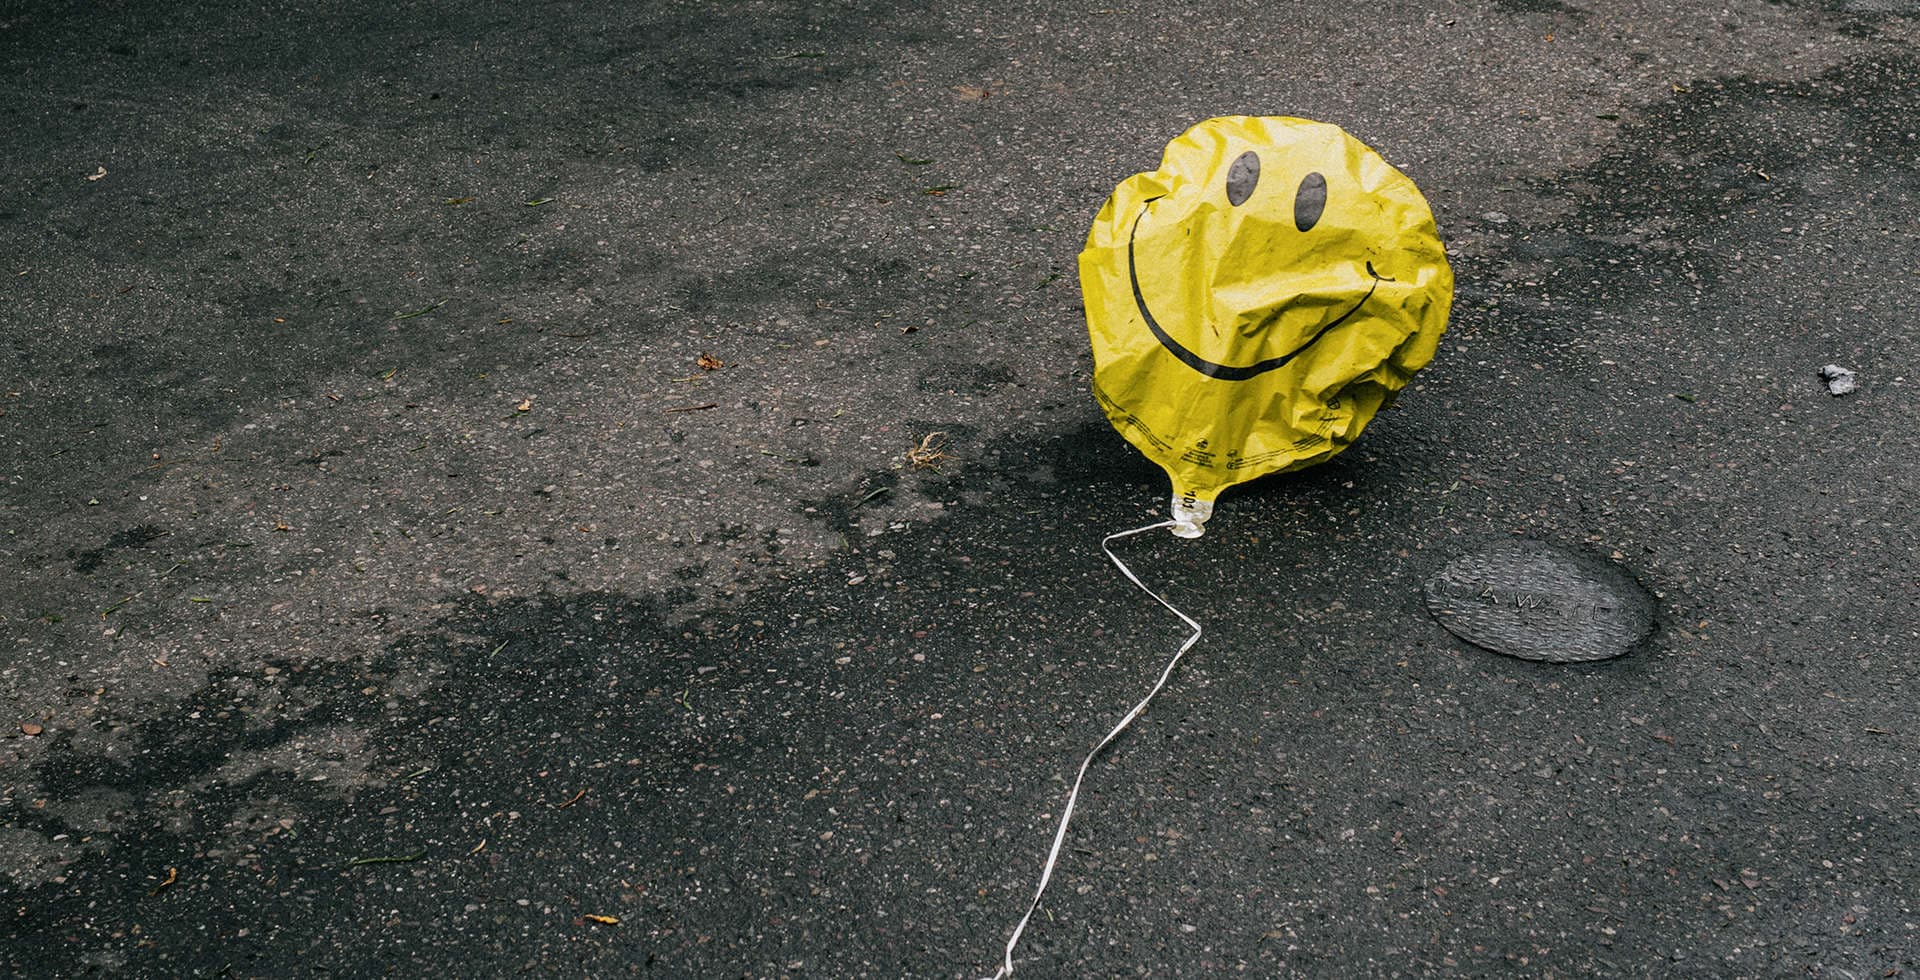 Foto på en gul ballong med en glad emoji-figur som ligger på marken